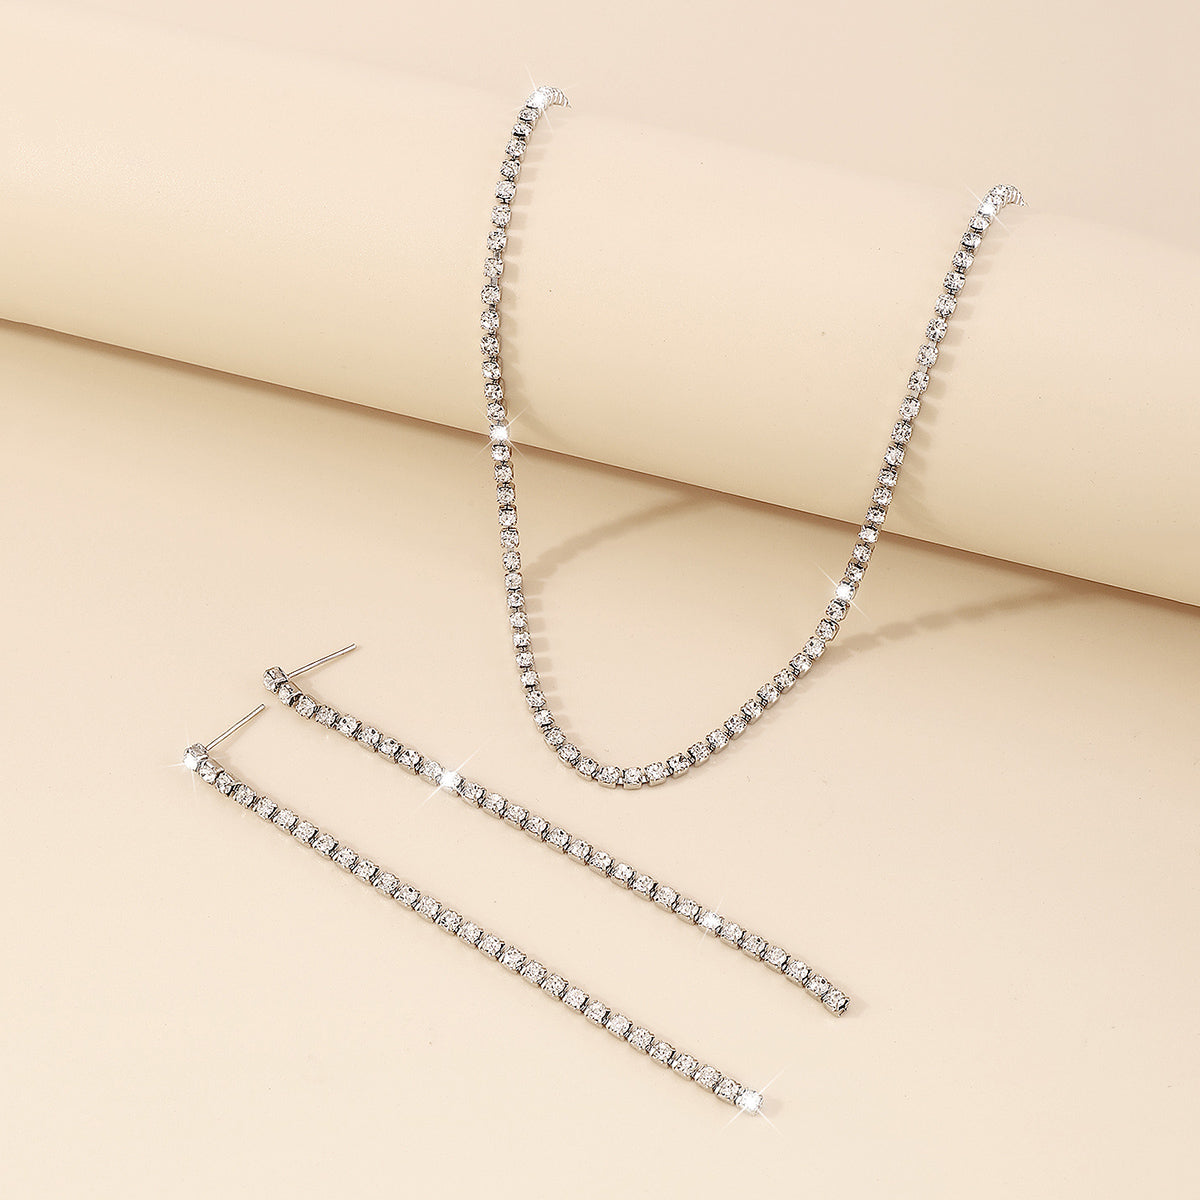 1 Row Shiny Choker Tennis Chain Necklace Set medyjewelry